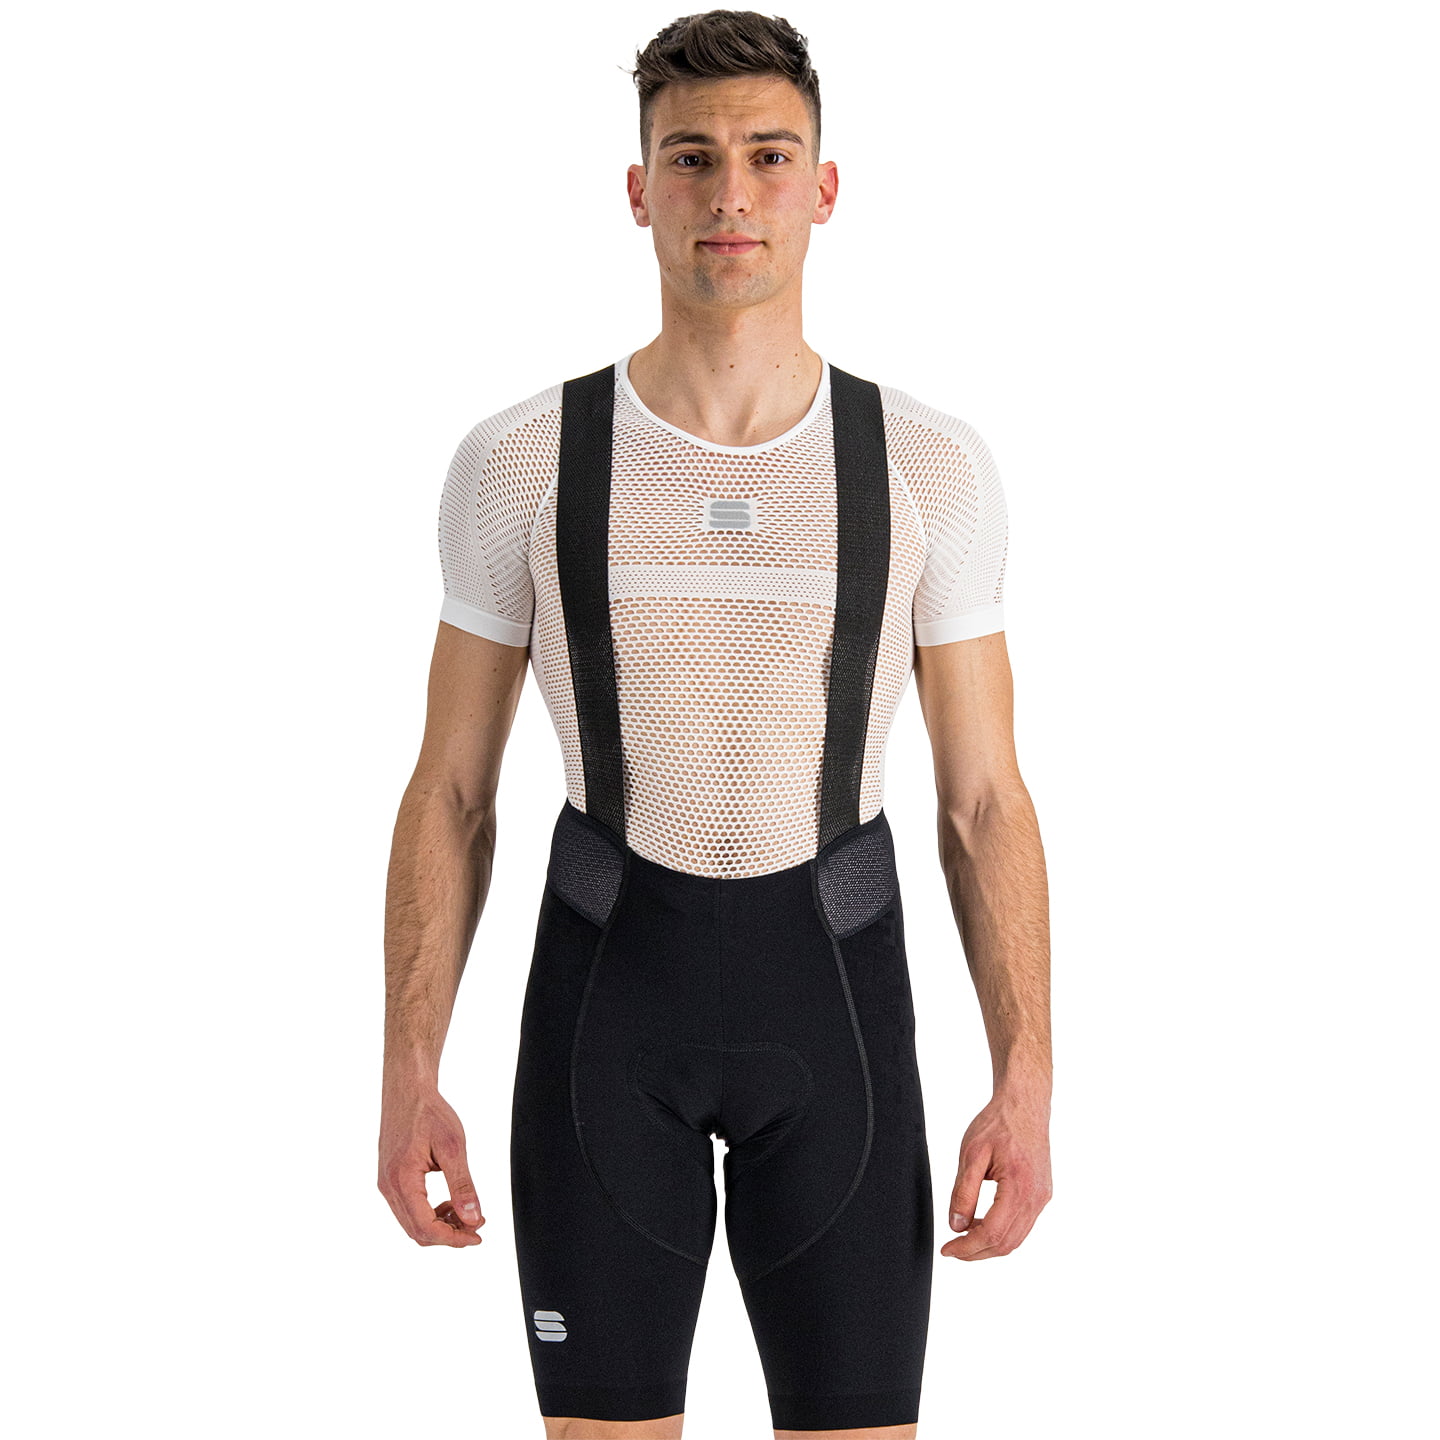 SPORTFUL Total Comfort Bib Shorts Bib Shorts, for men, size XL, Cycle shorts, Cycling clothing